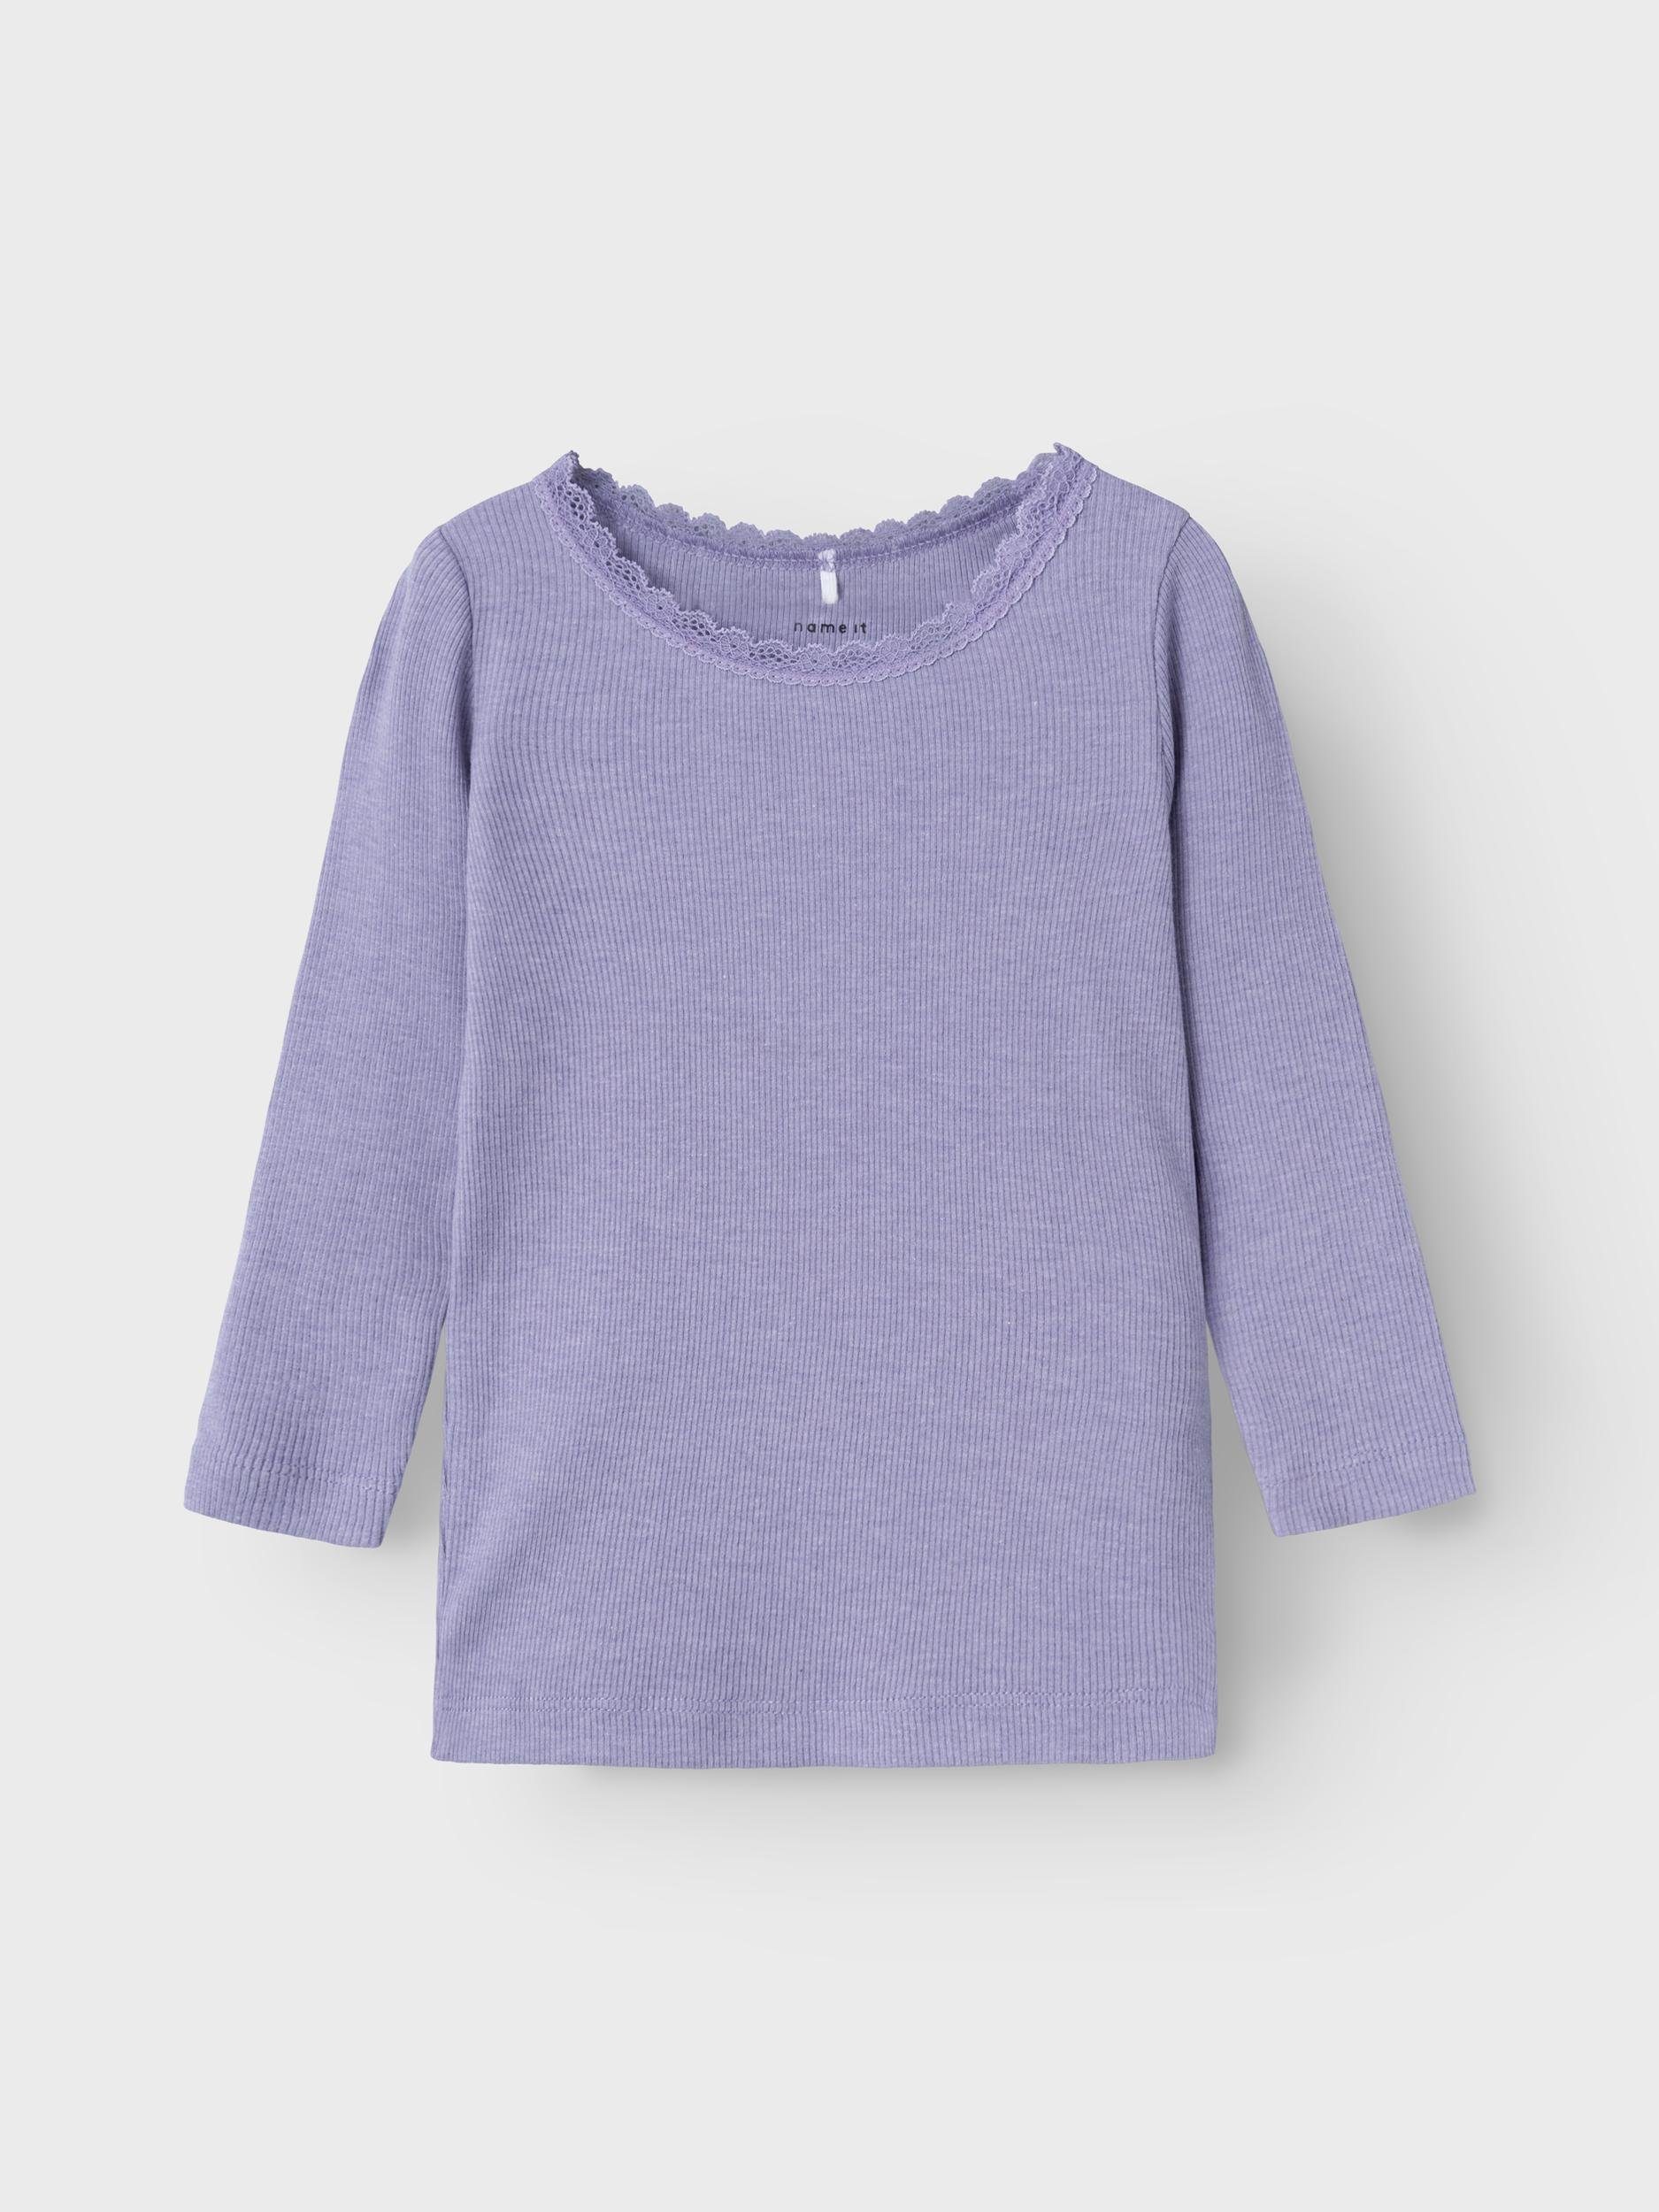 Name It T-Shirt TOP Lilac LS Detail:MELANGE NMFKAB NOOS Heirloom